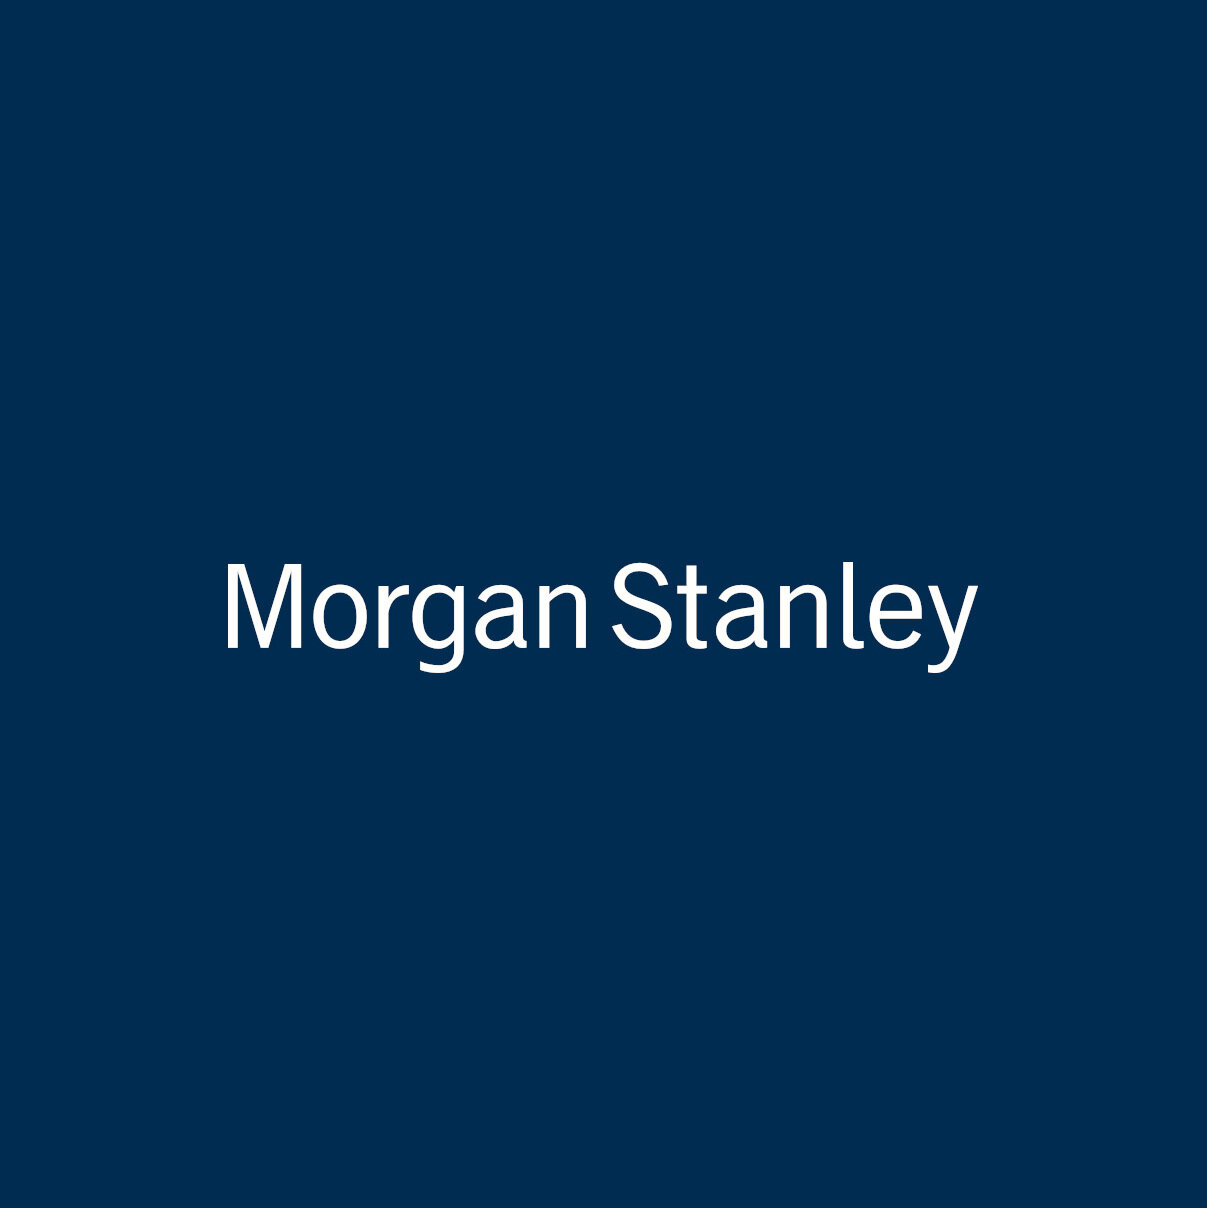 Morgan Stanley Redesign